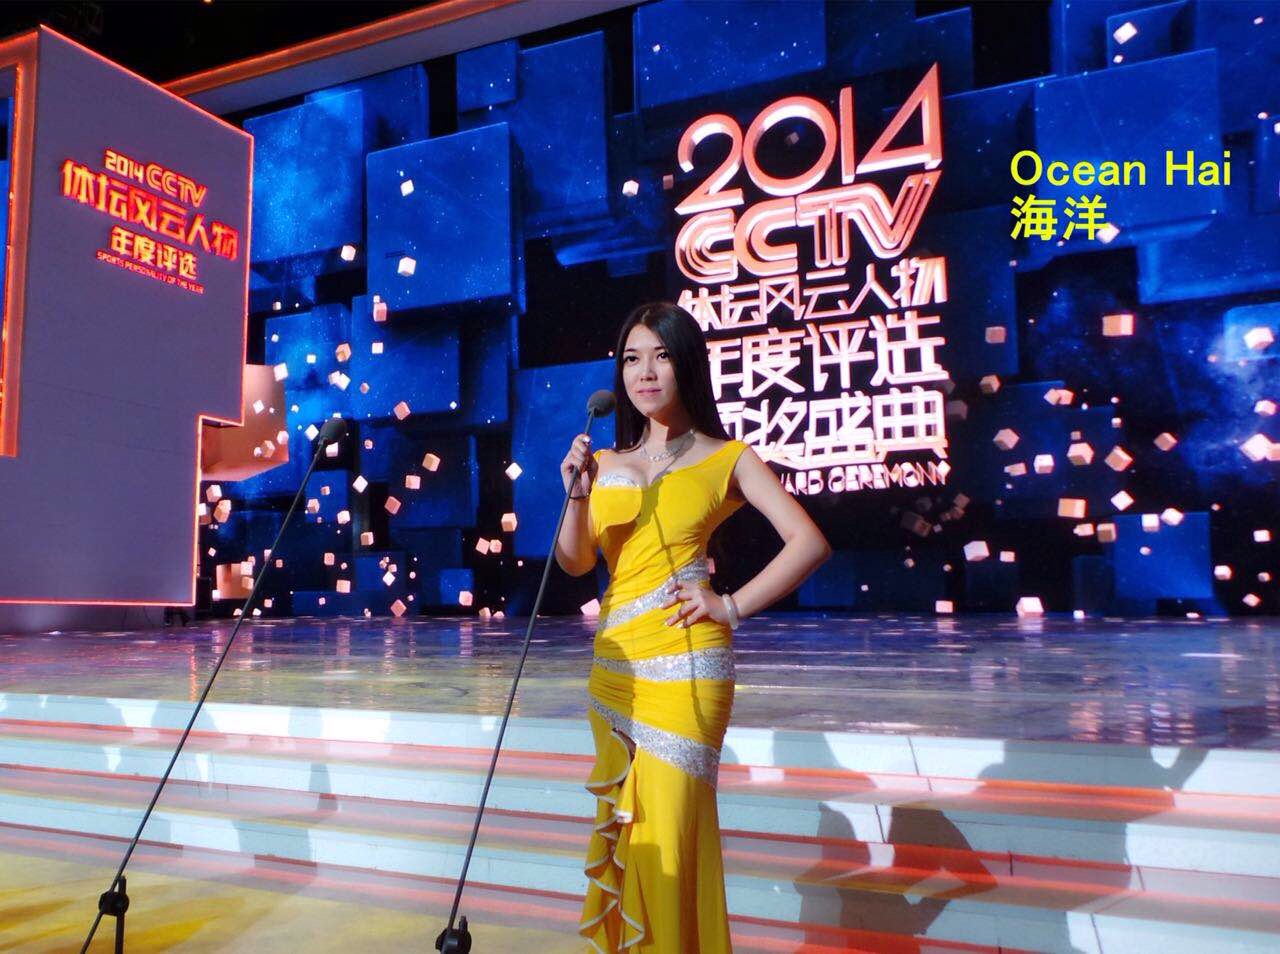 Guest Speaker for 2014 CCTV SPORTS Celebrity Awards Winners ( biggest sports event)